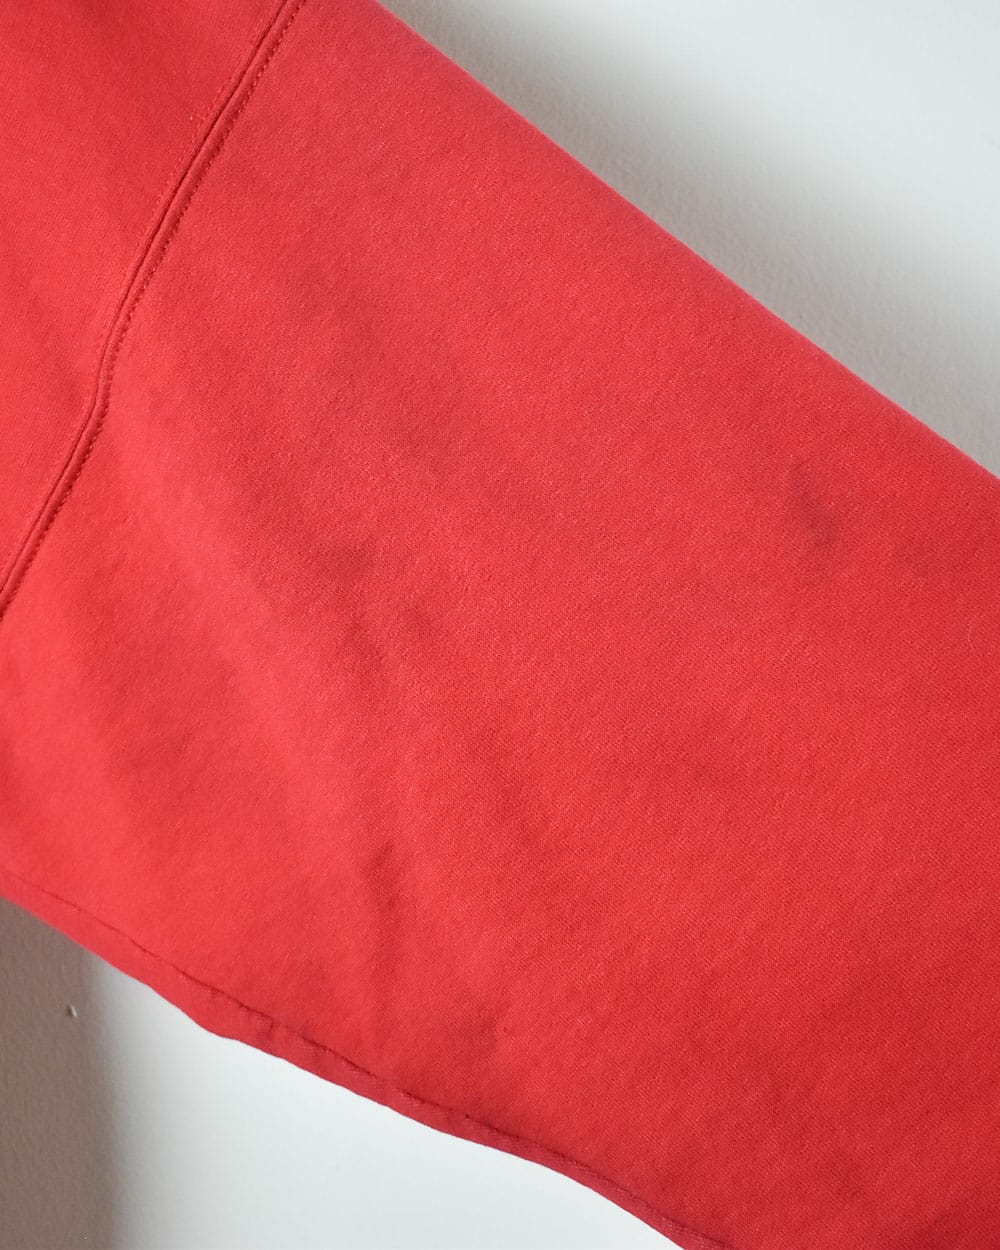 Red Champion Ohio State Sweatshirt - XX-Large